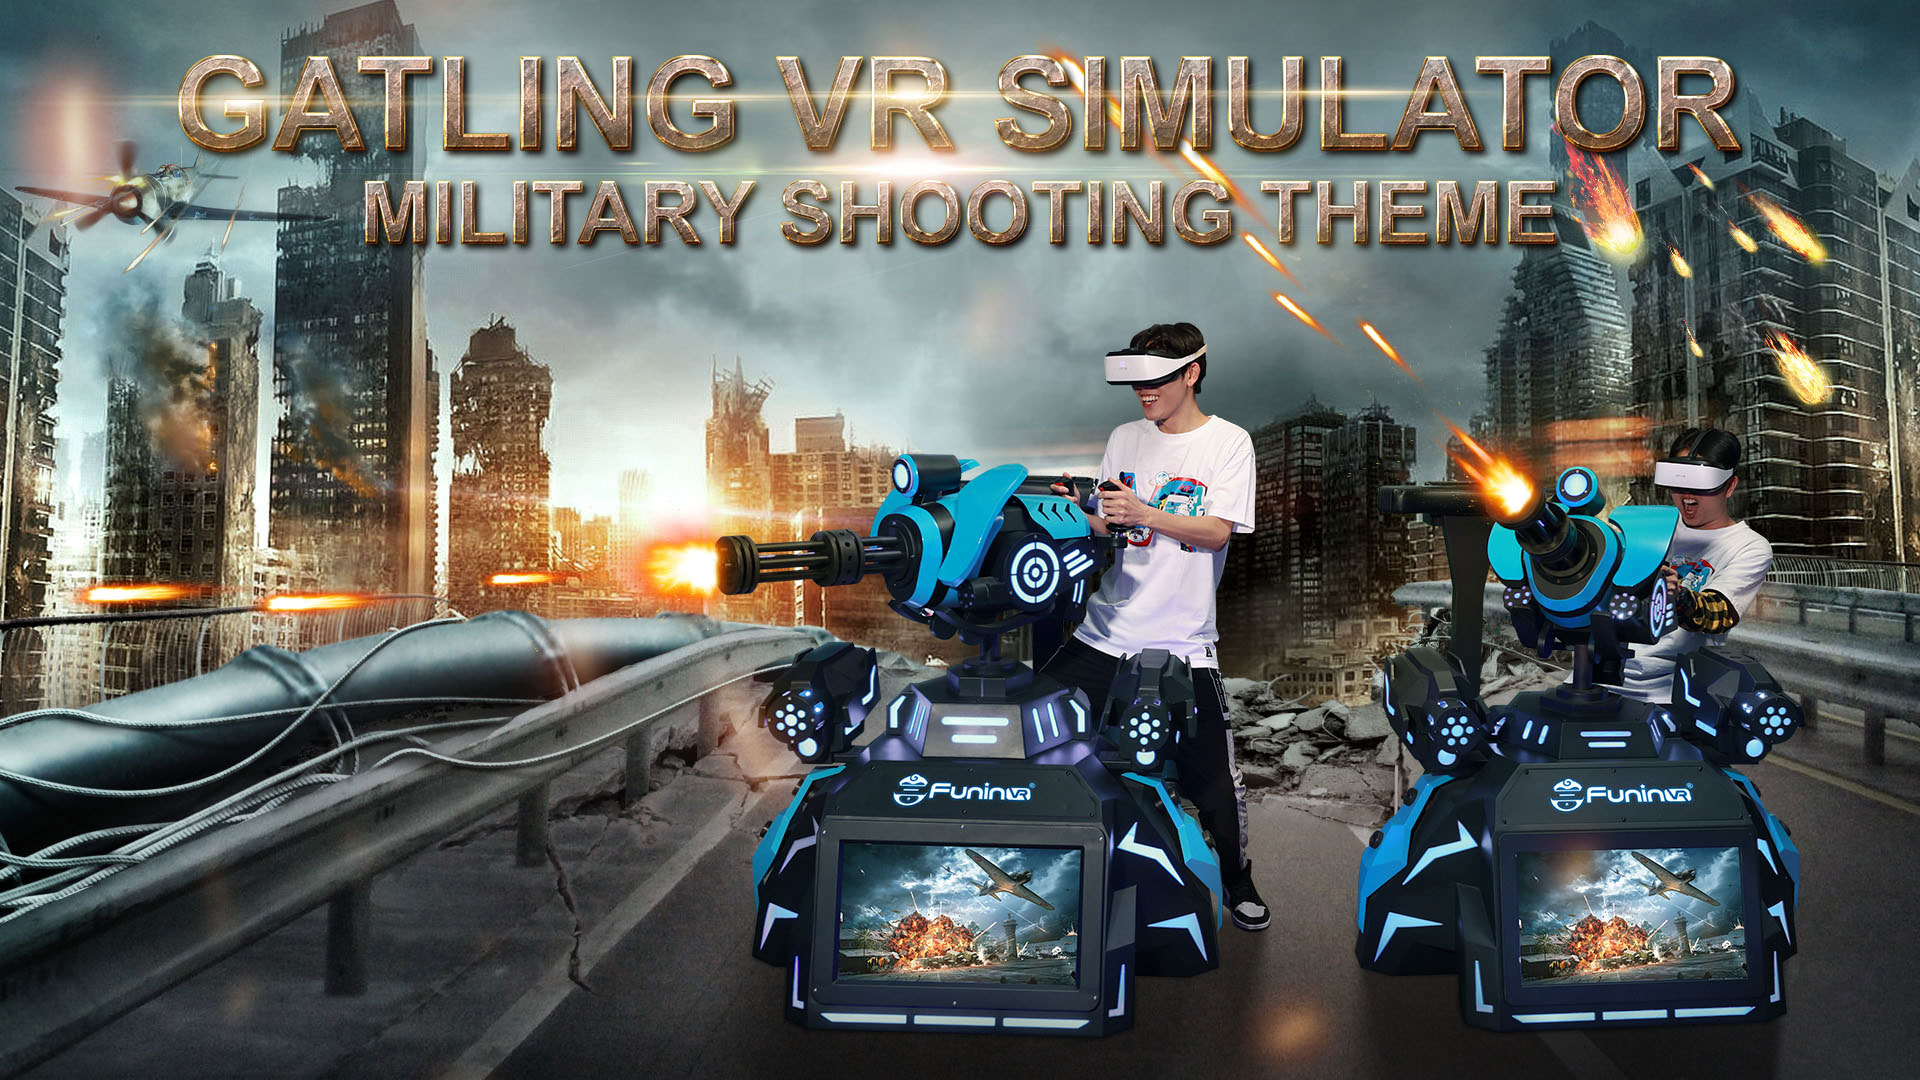 Gatling-VR-Simulator-1